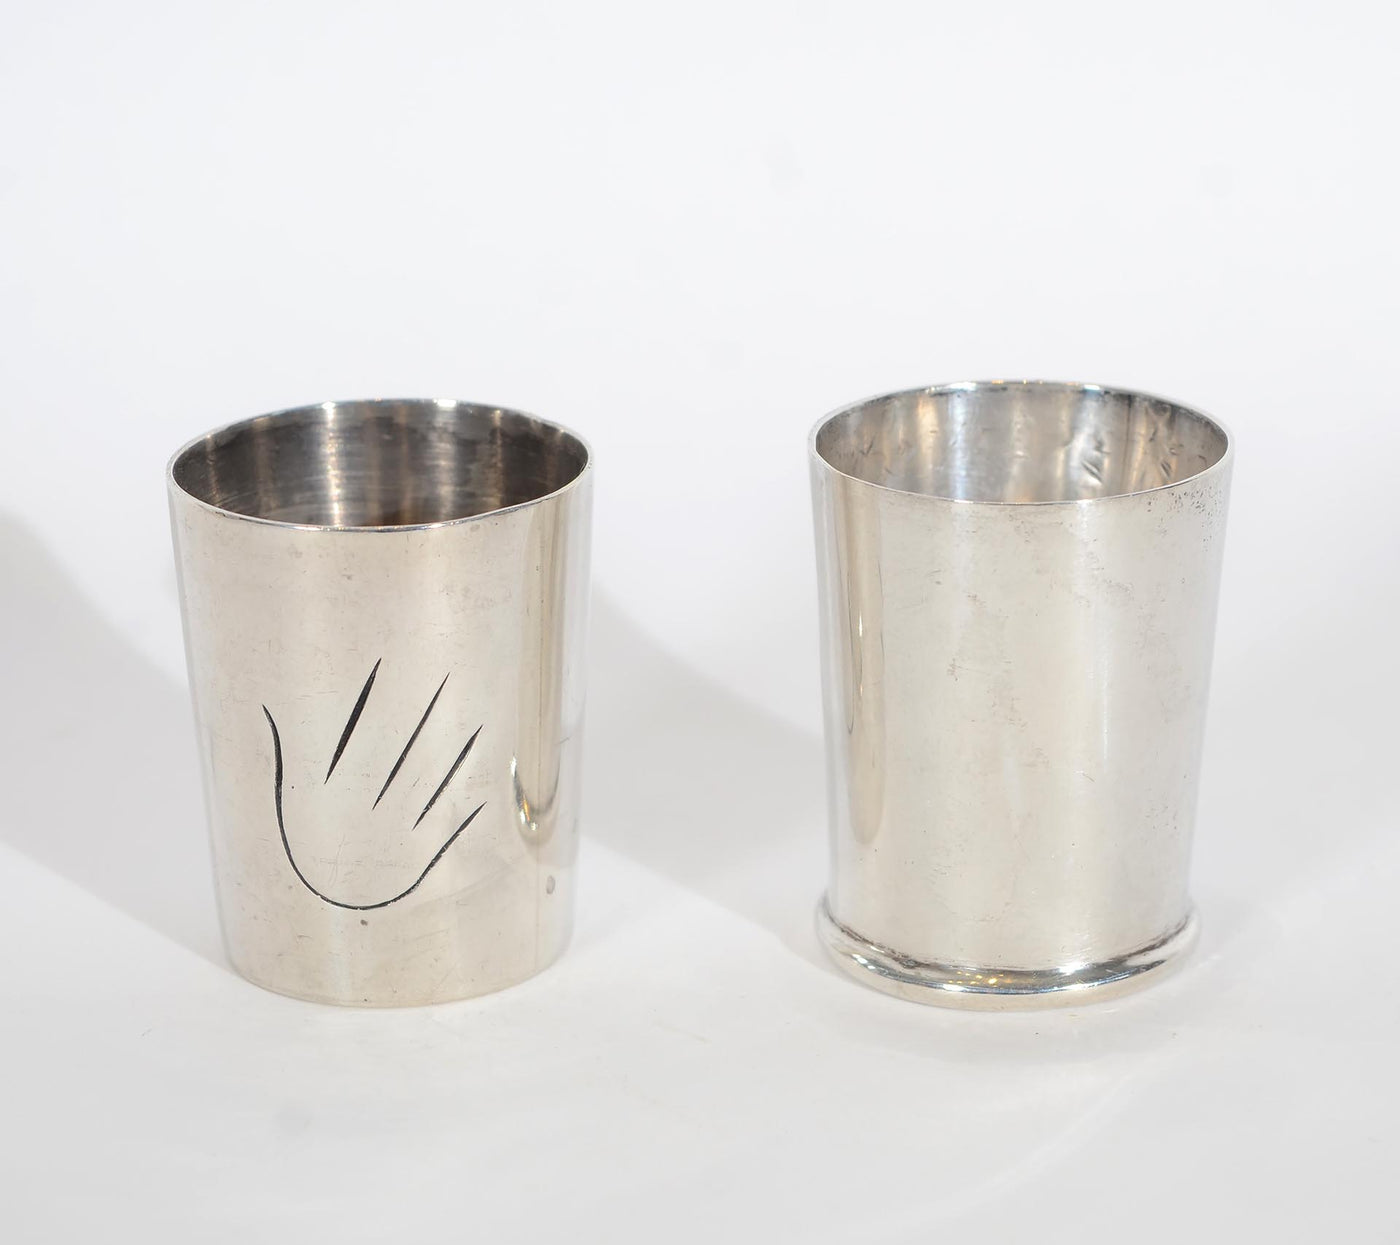 william-spratling-silver-shot-glasses-1356104-full-product